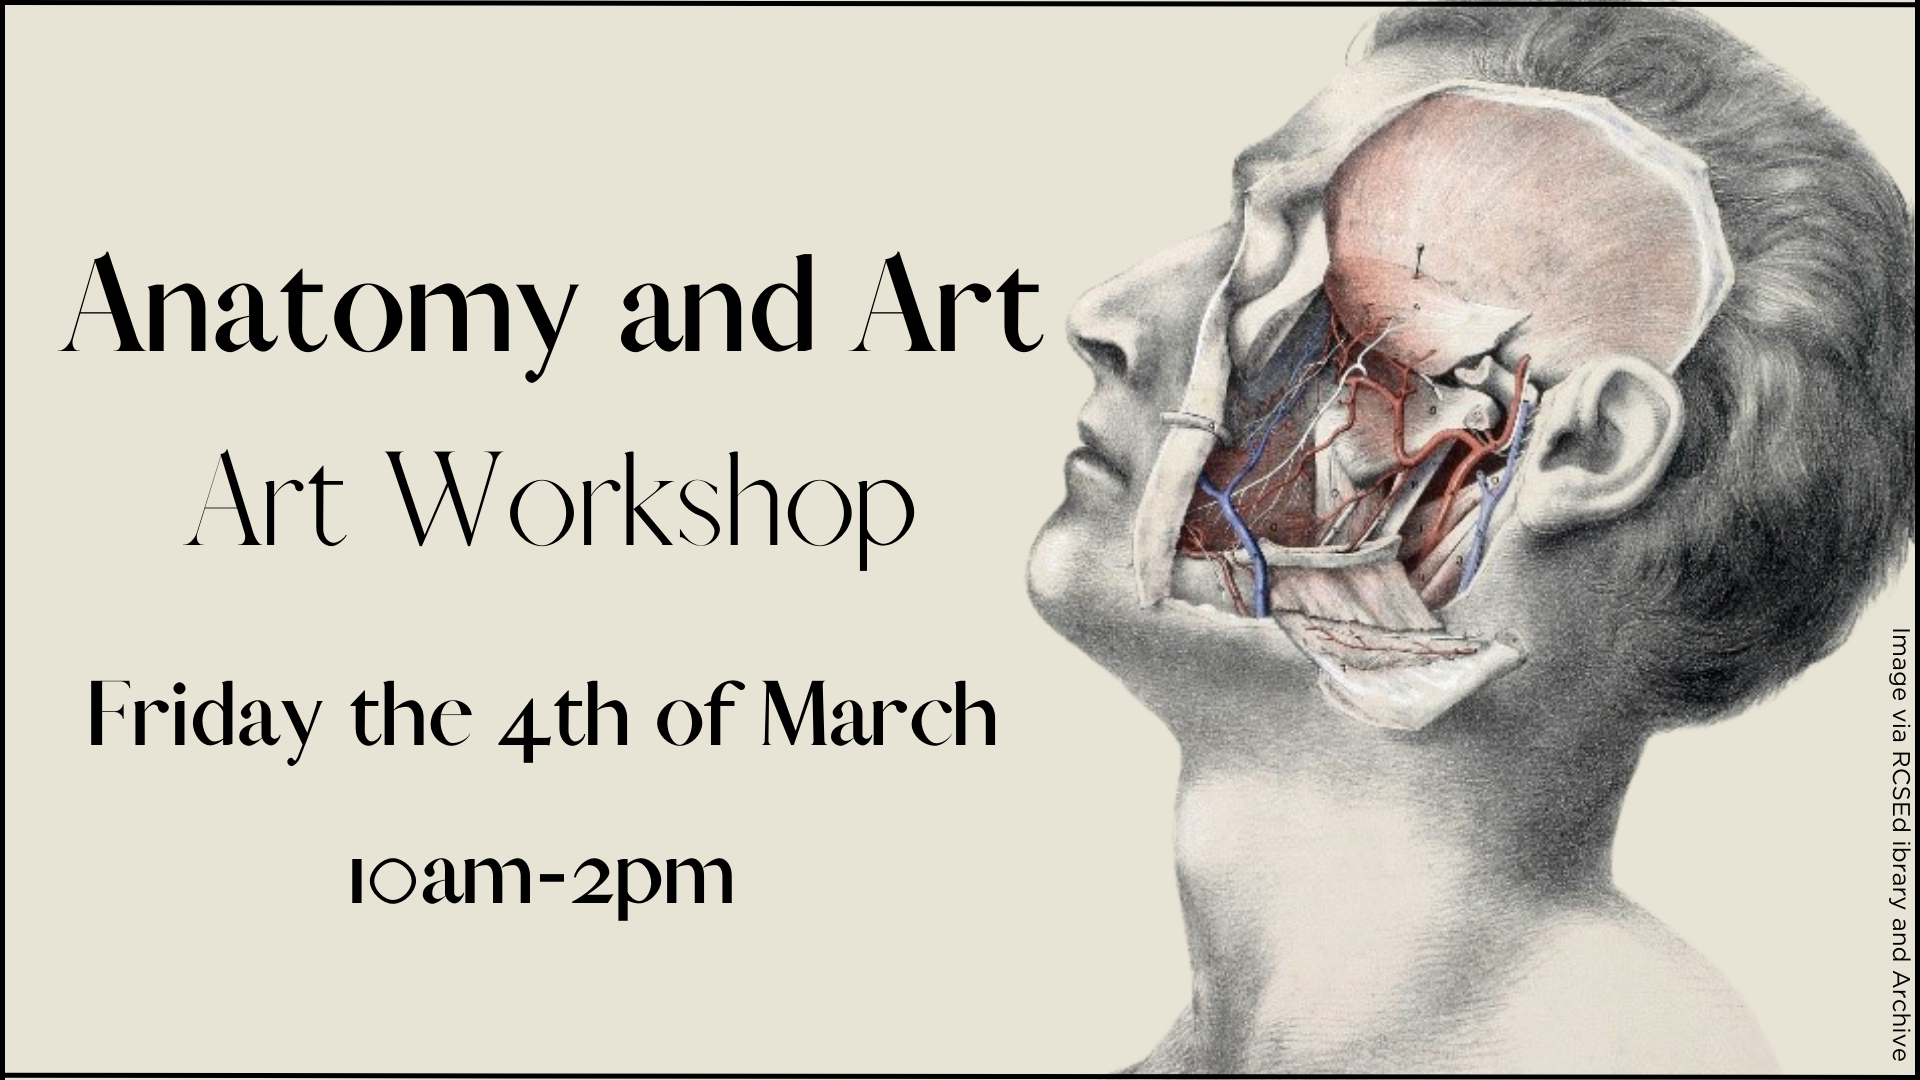 Anatomy and Art: Art Workshop